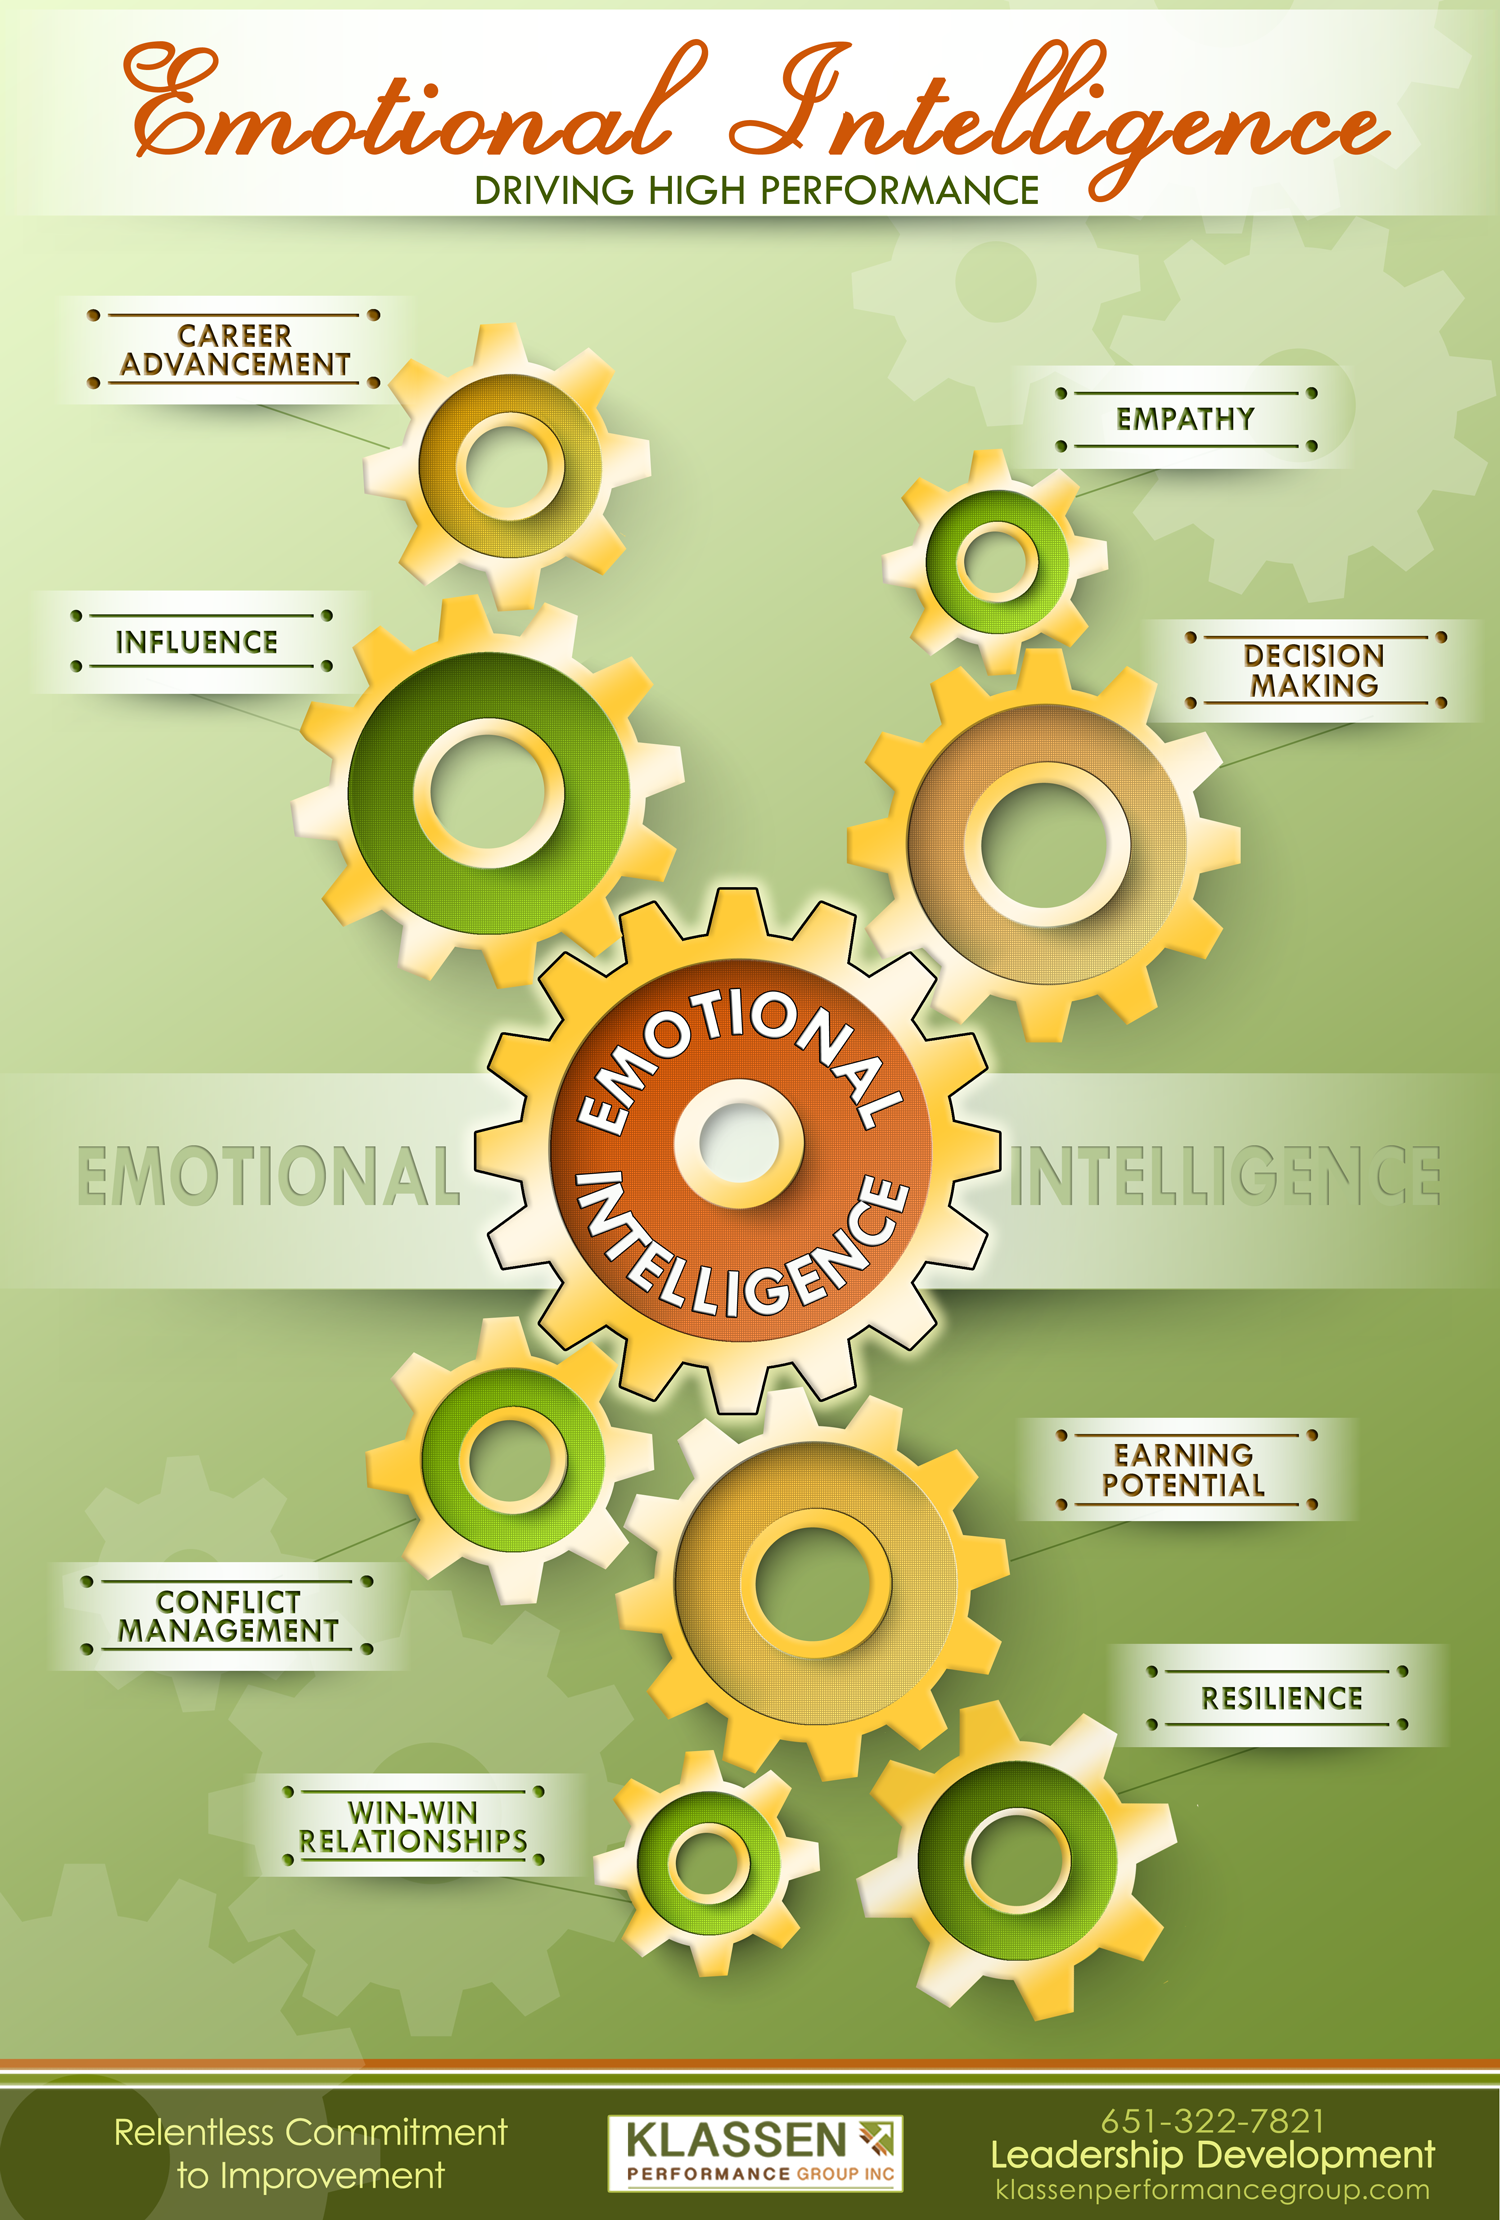 Emotional Intelligence Drives High Performance